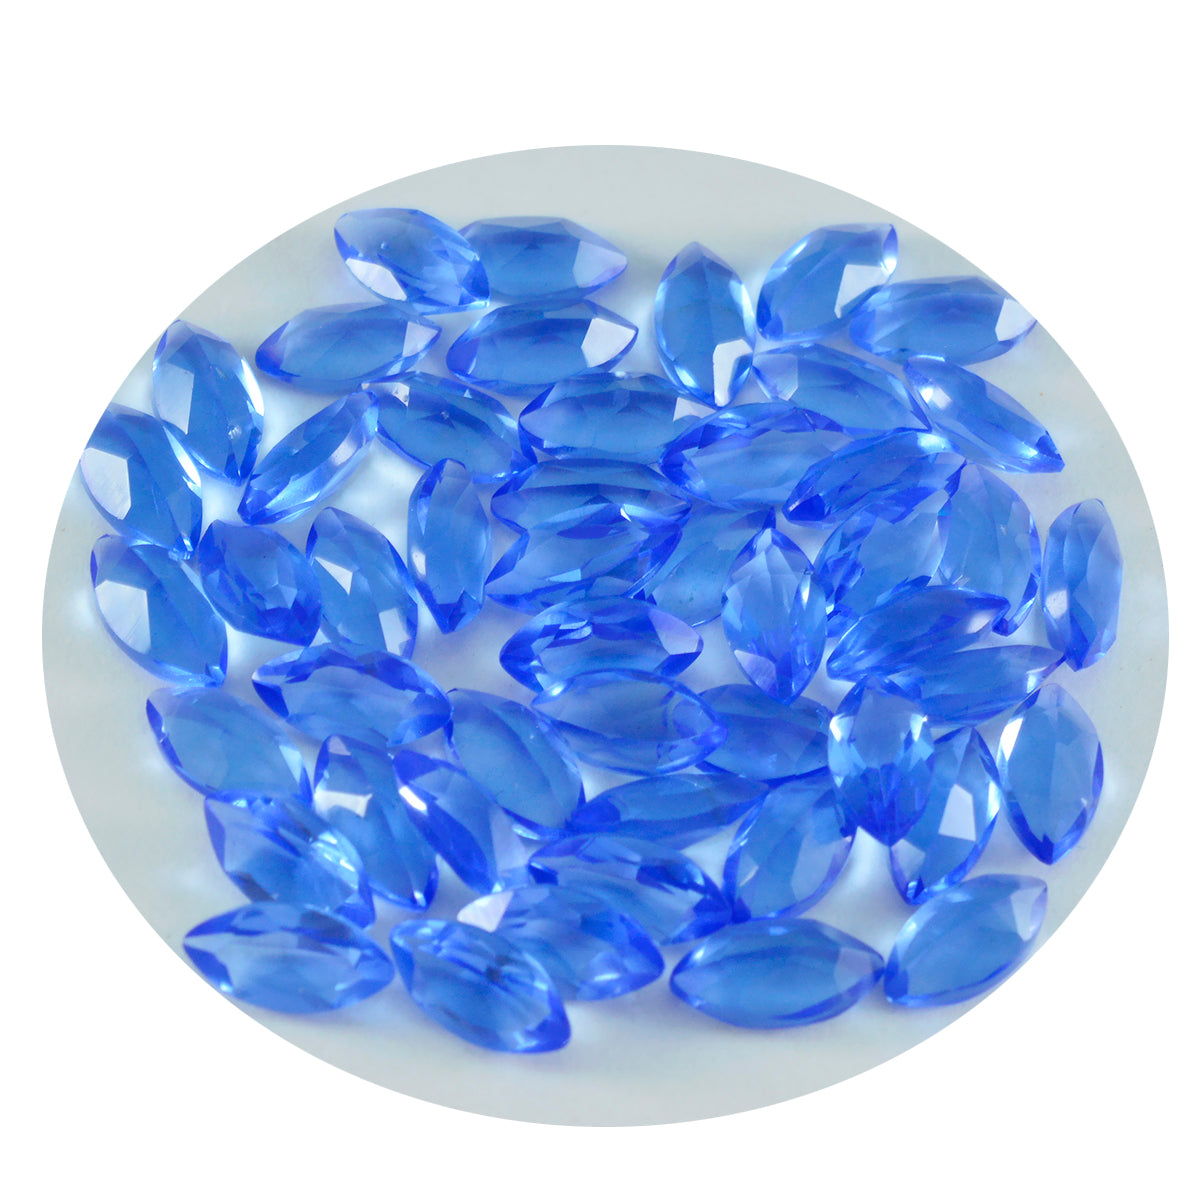 Riyogems 1PC Blue Sapphire CZ Faceted 3x6 mm Marquise Shape wonderful Quality Loose Gems